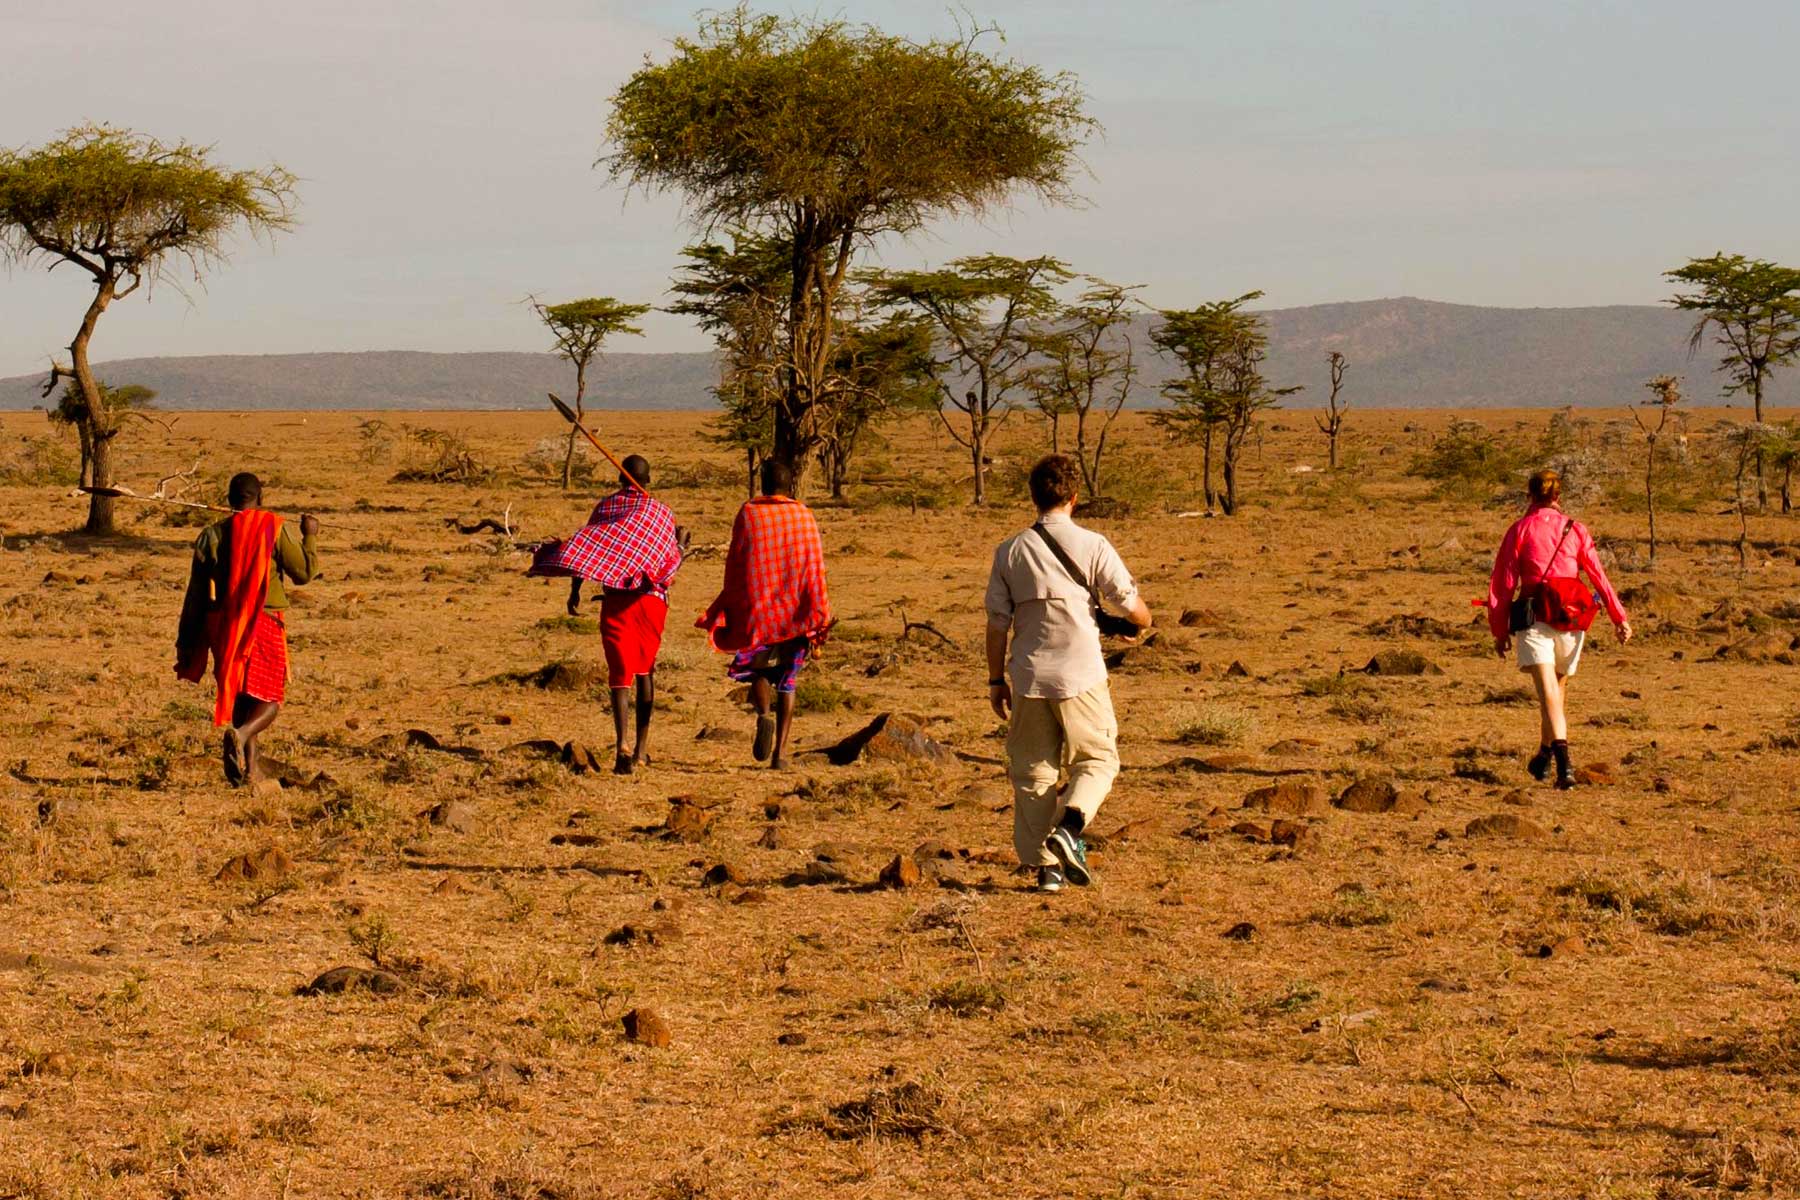 Guided Nature Walks in Masai Mara National Reserve